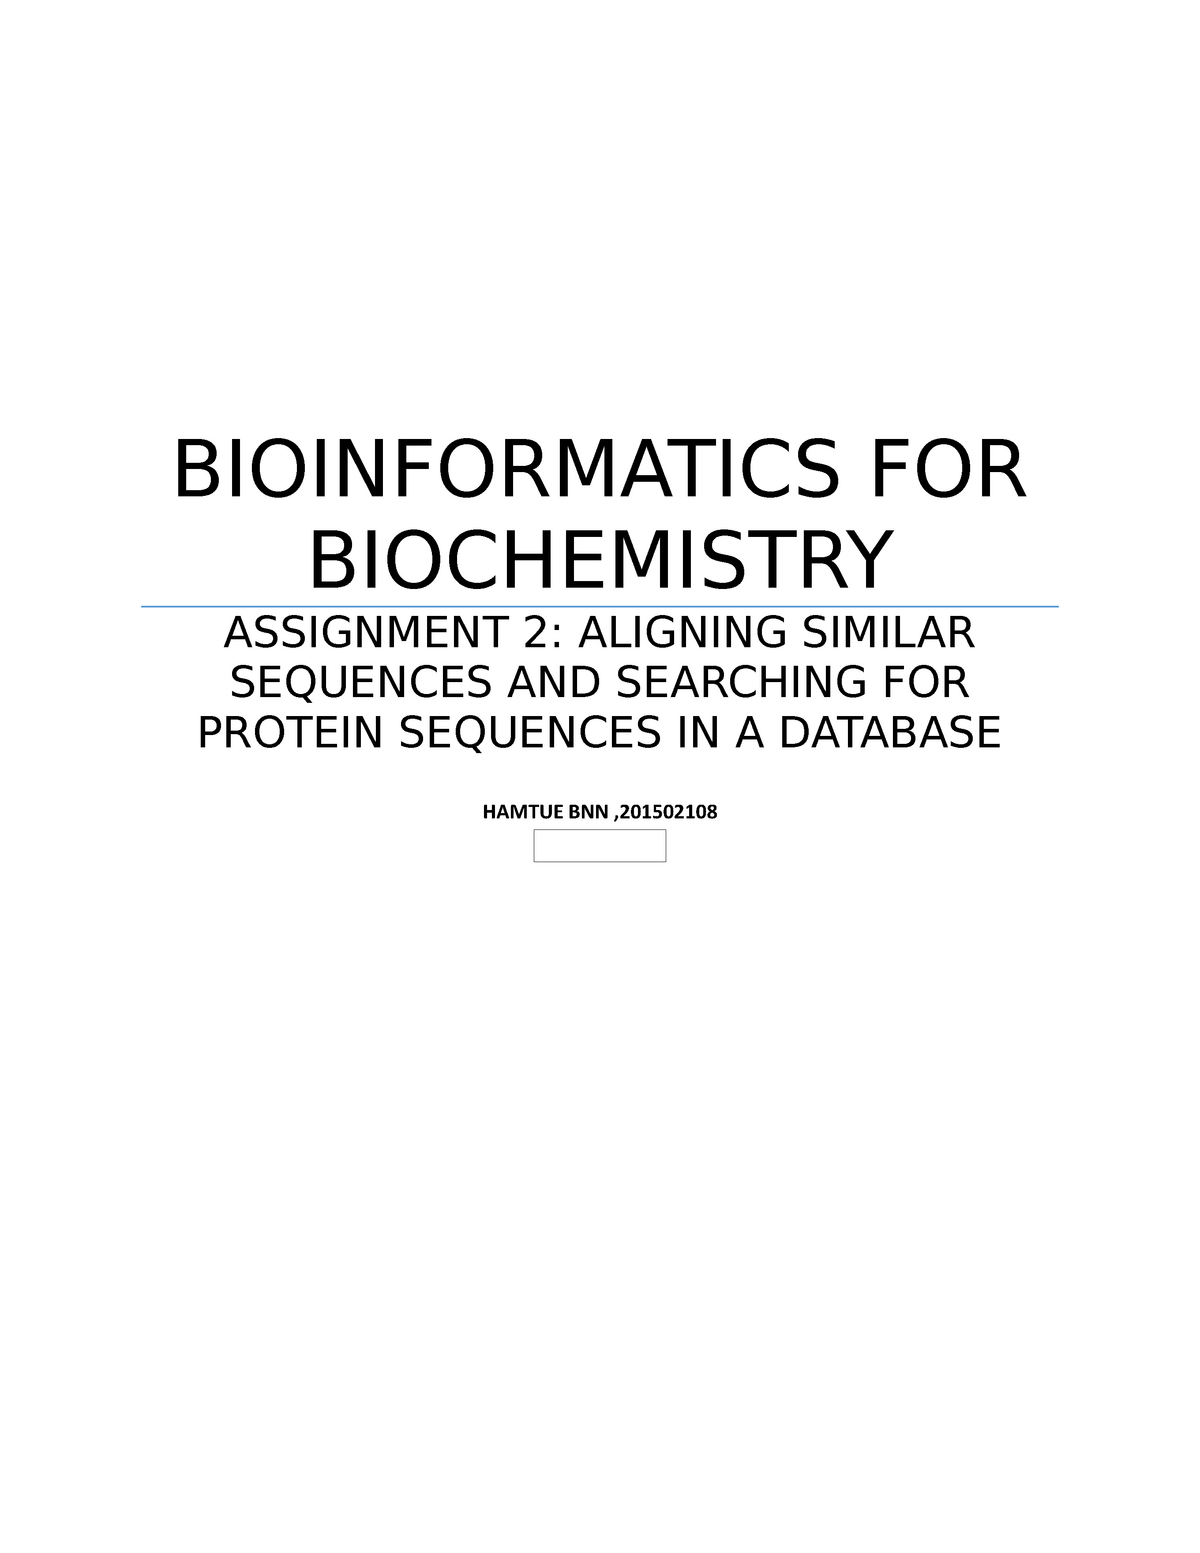 assignment on bioinformatics